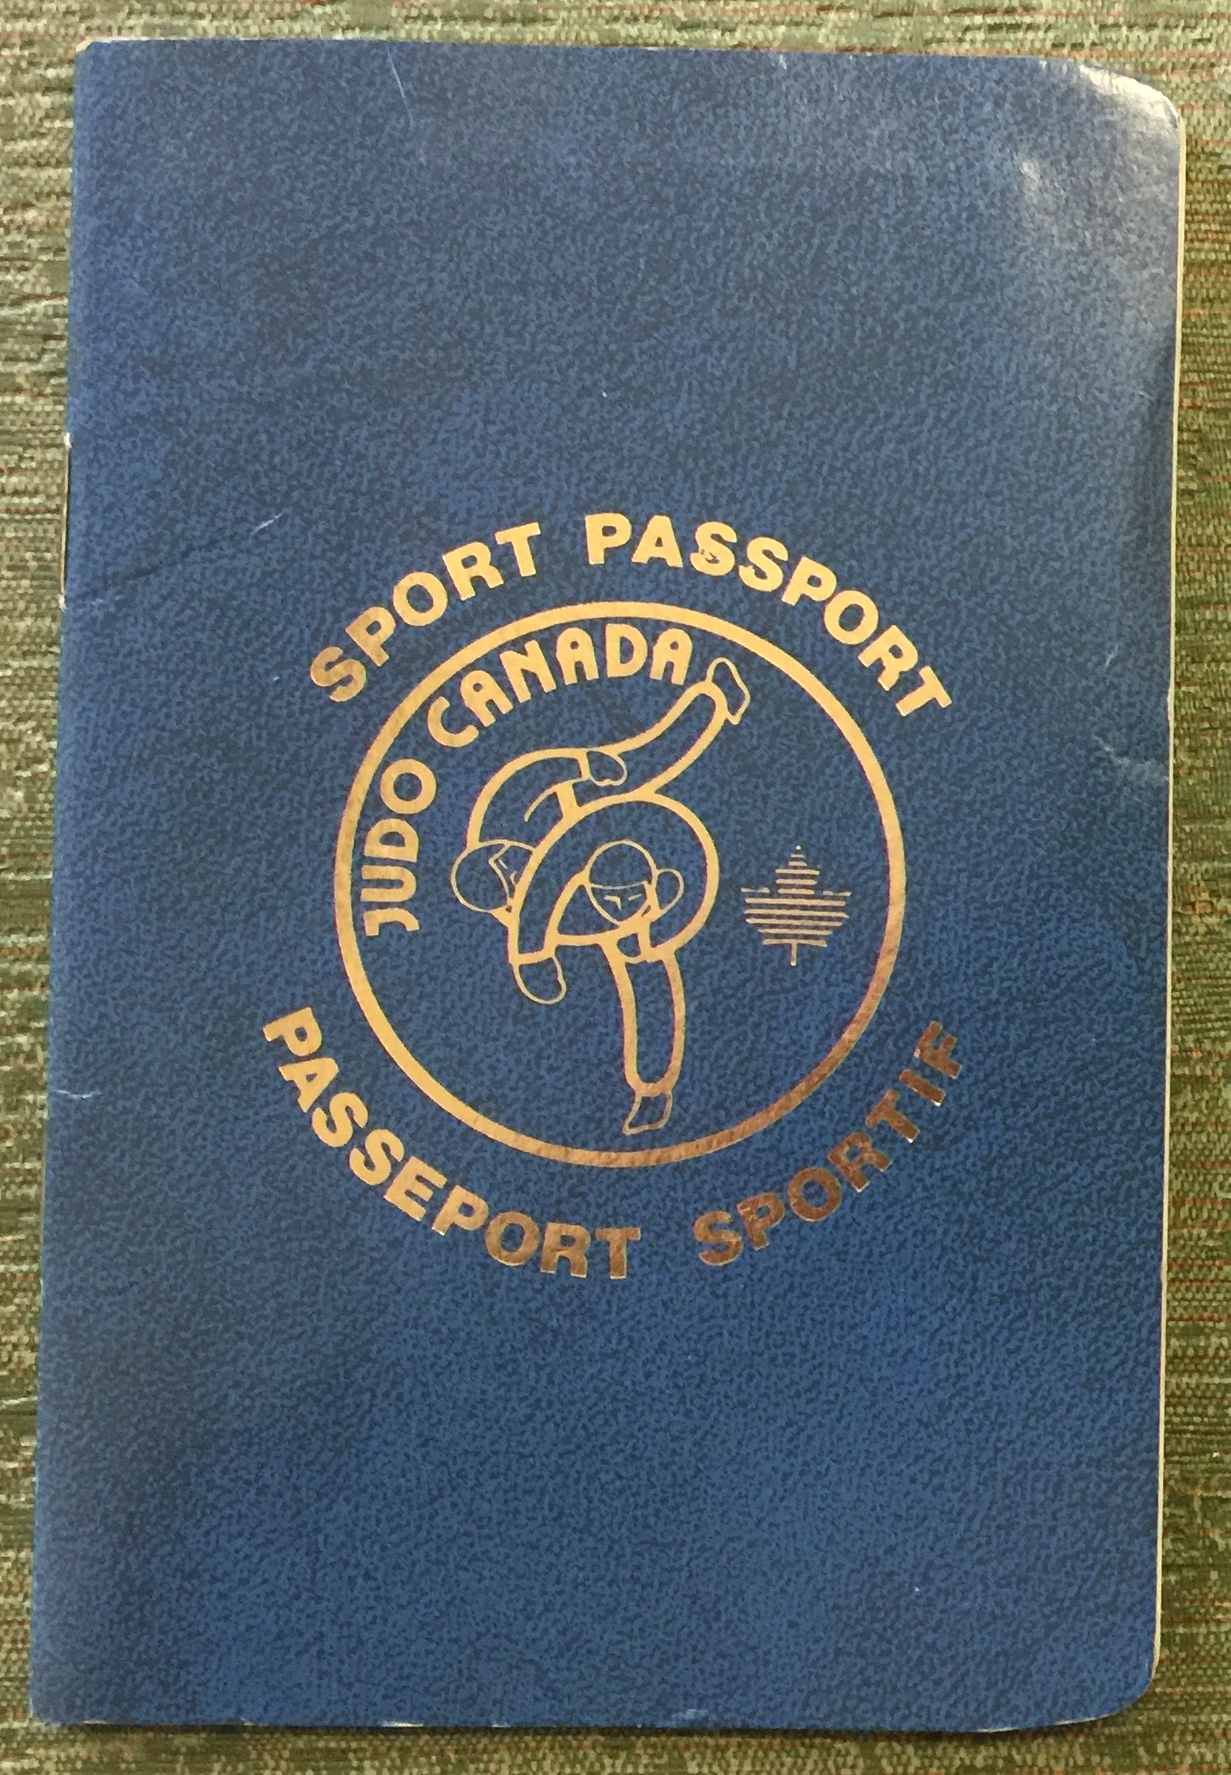 JC passport